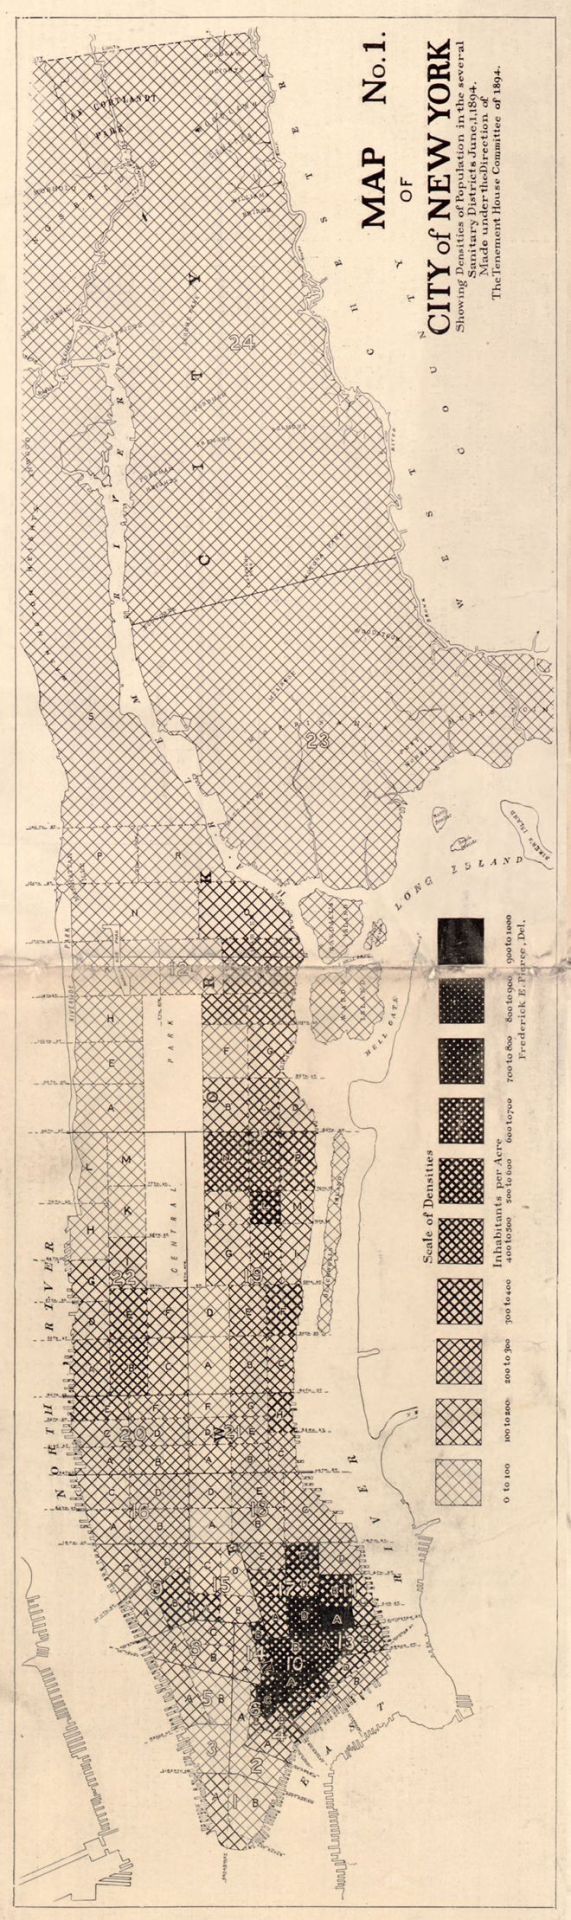 population density map us 1890